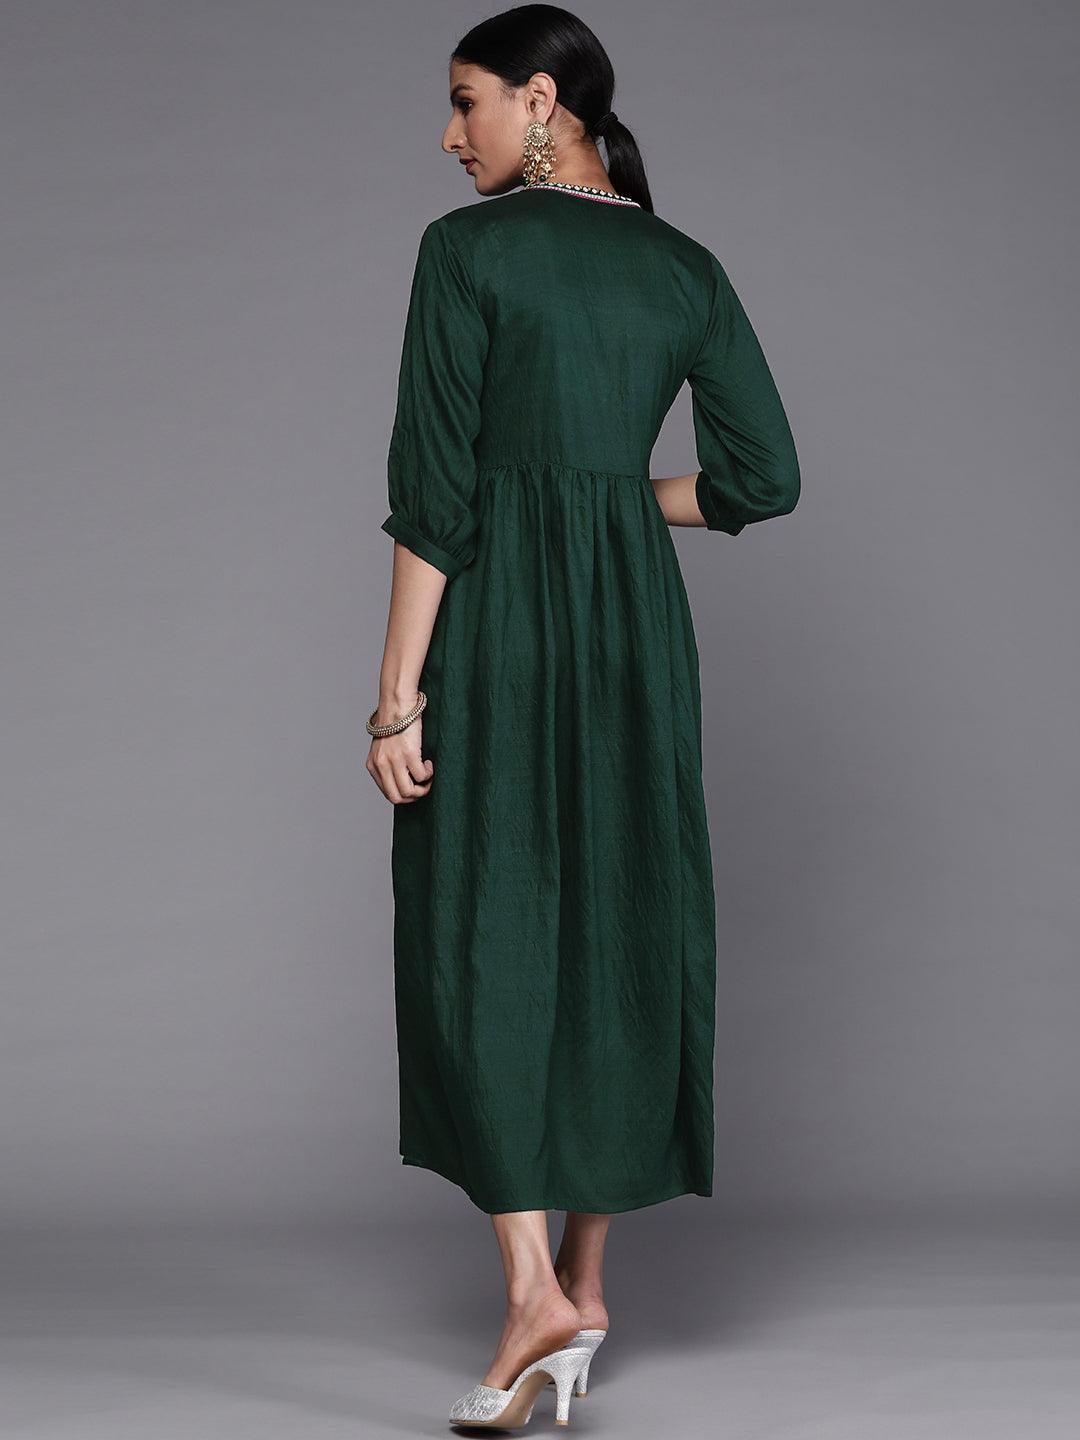 Green Embroidered Viscose Rayon Dress - Libas